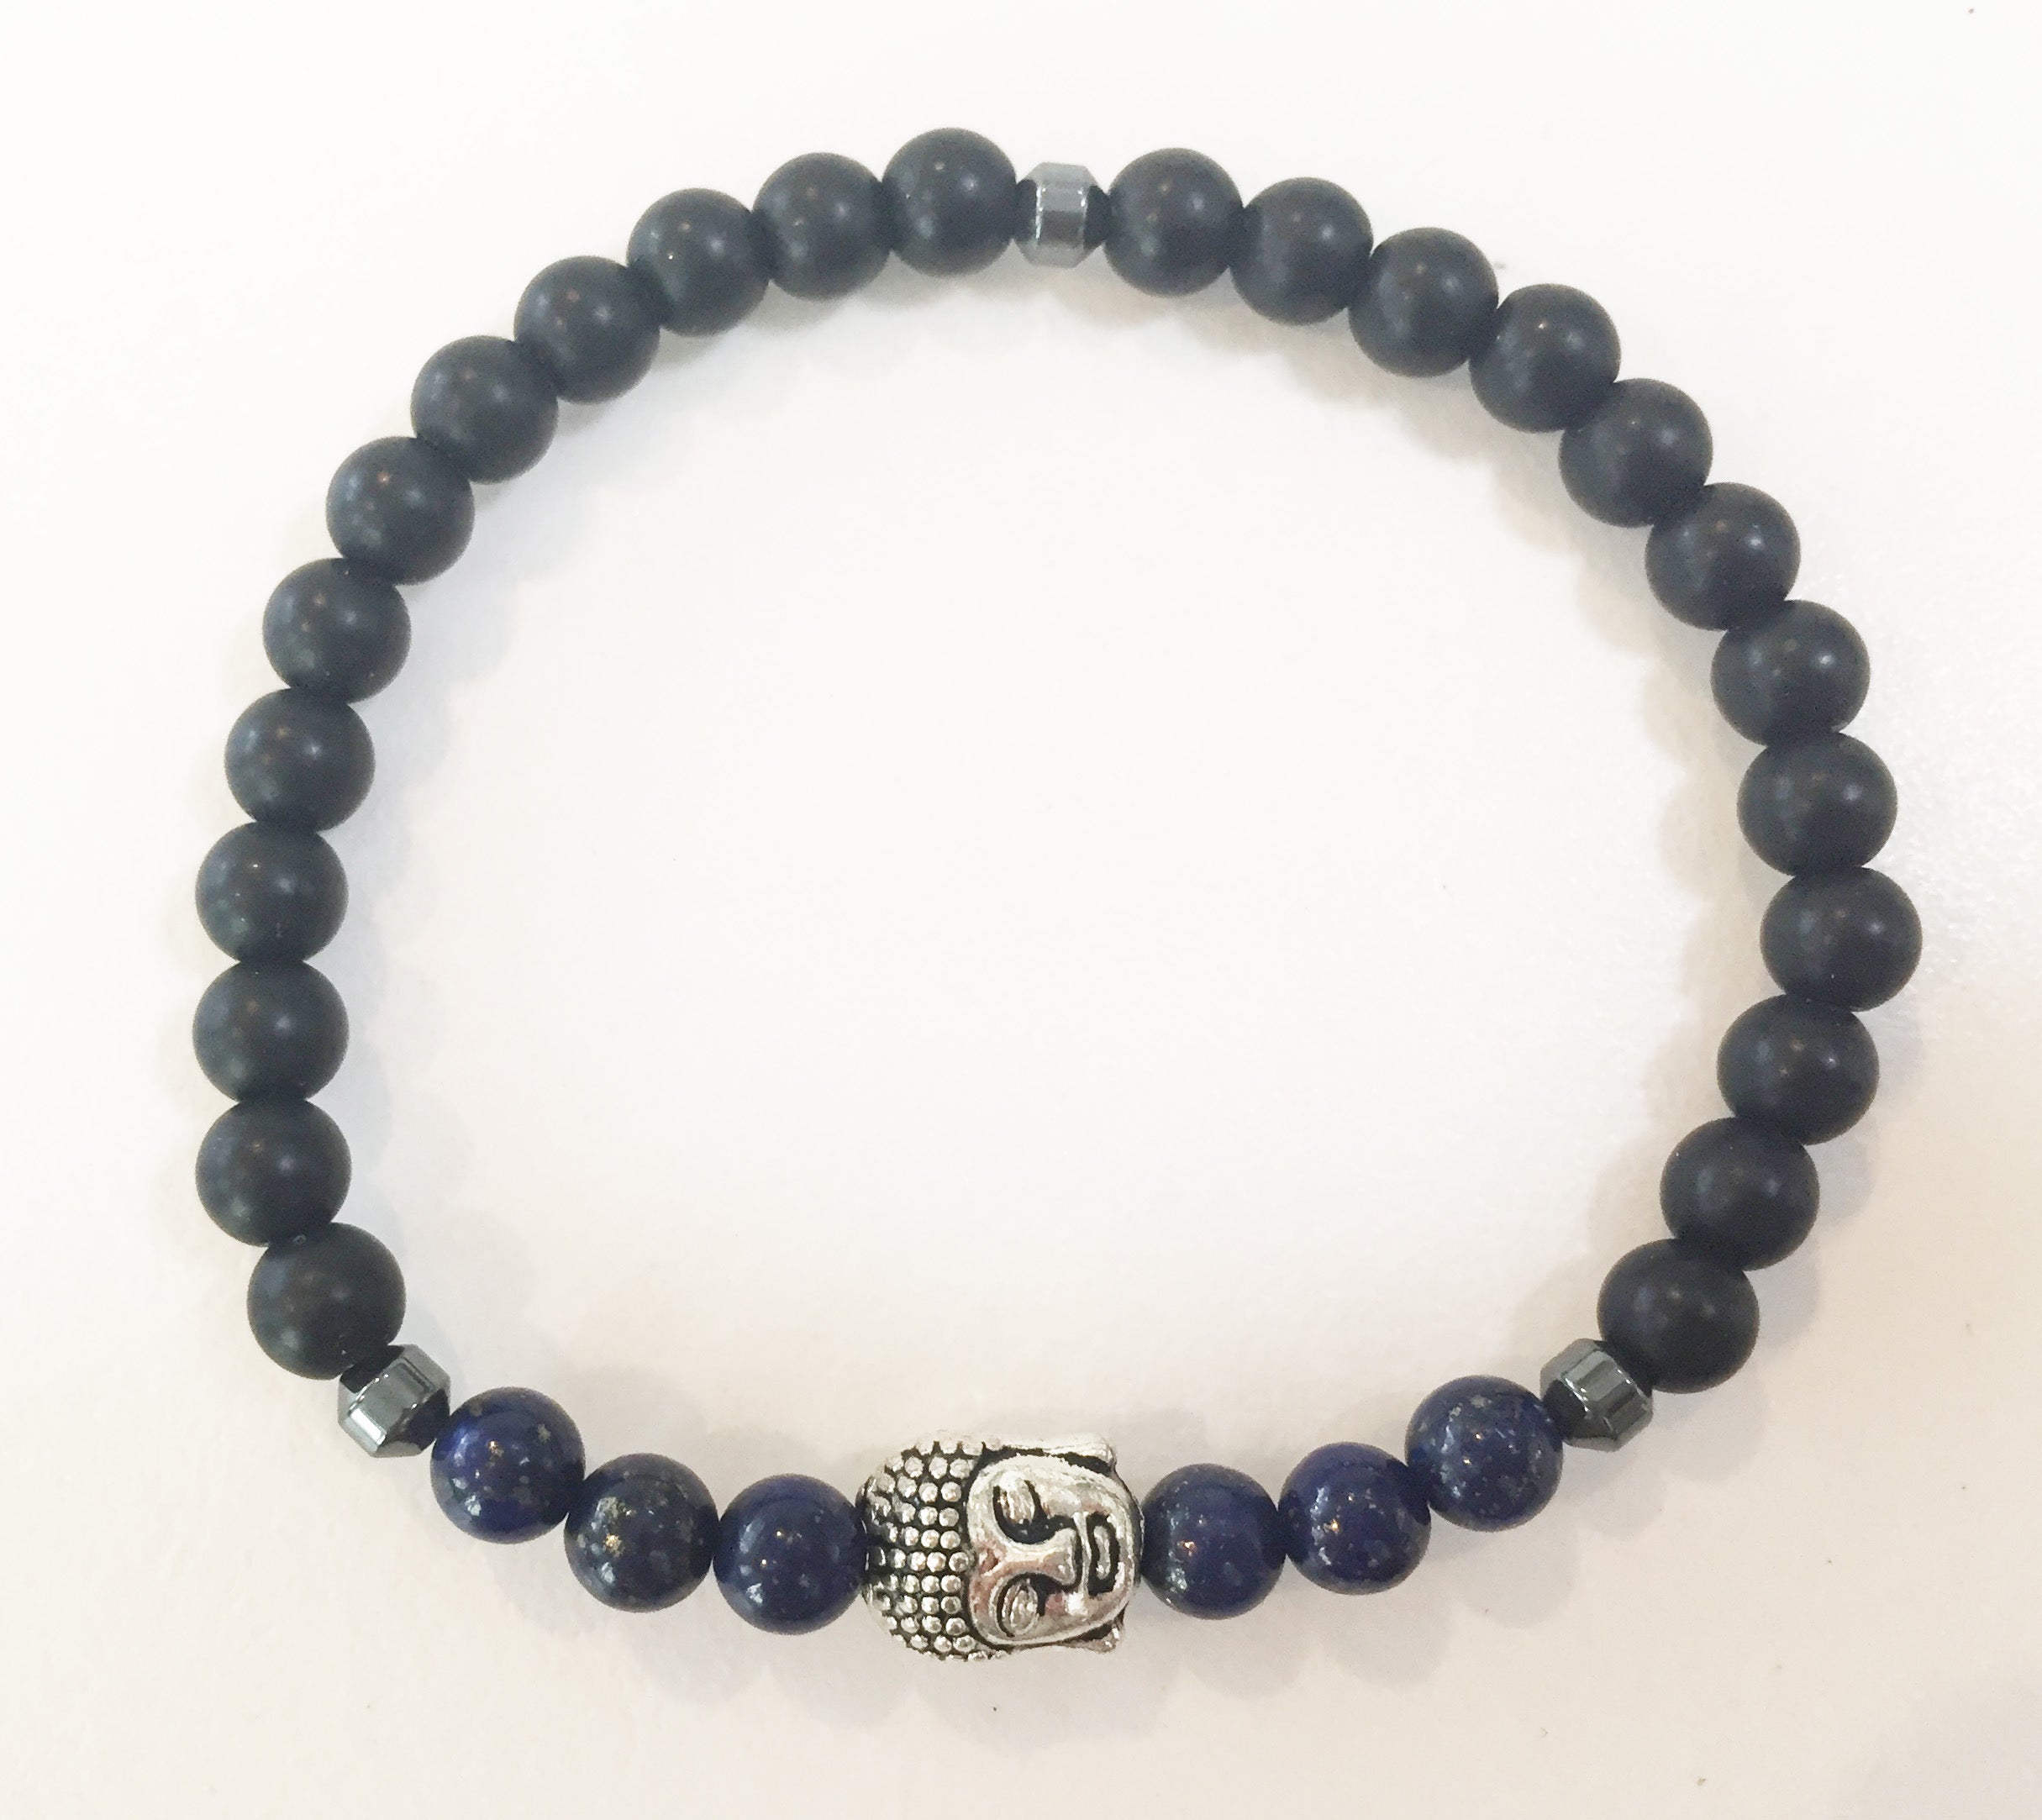 6mm Matte Obsidian & Lapis Stretch Bracelet with Buddha Head